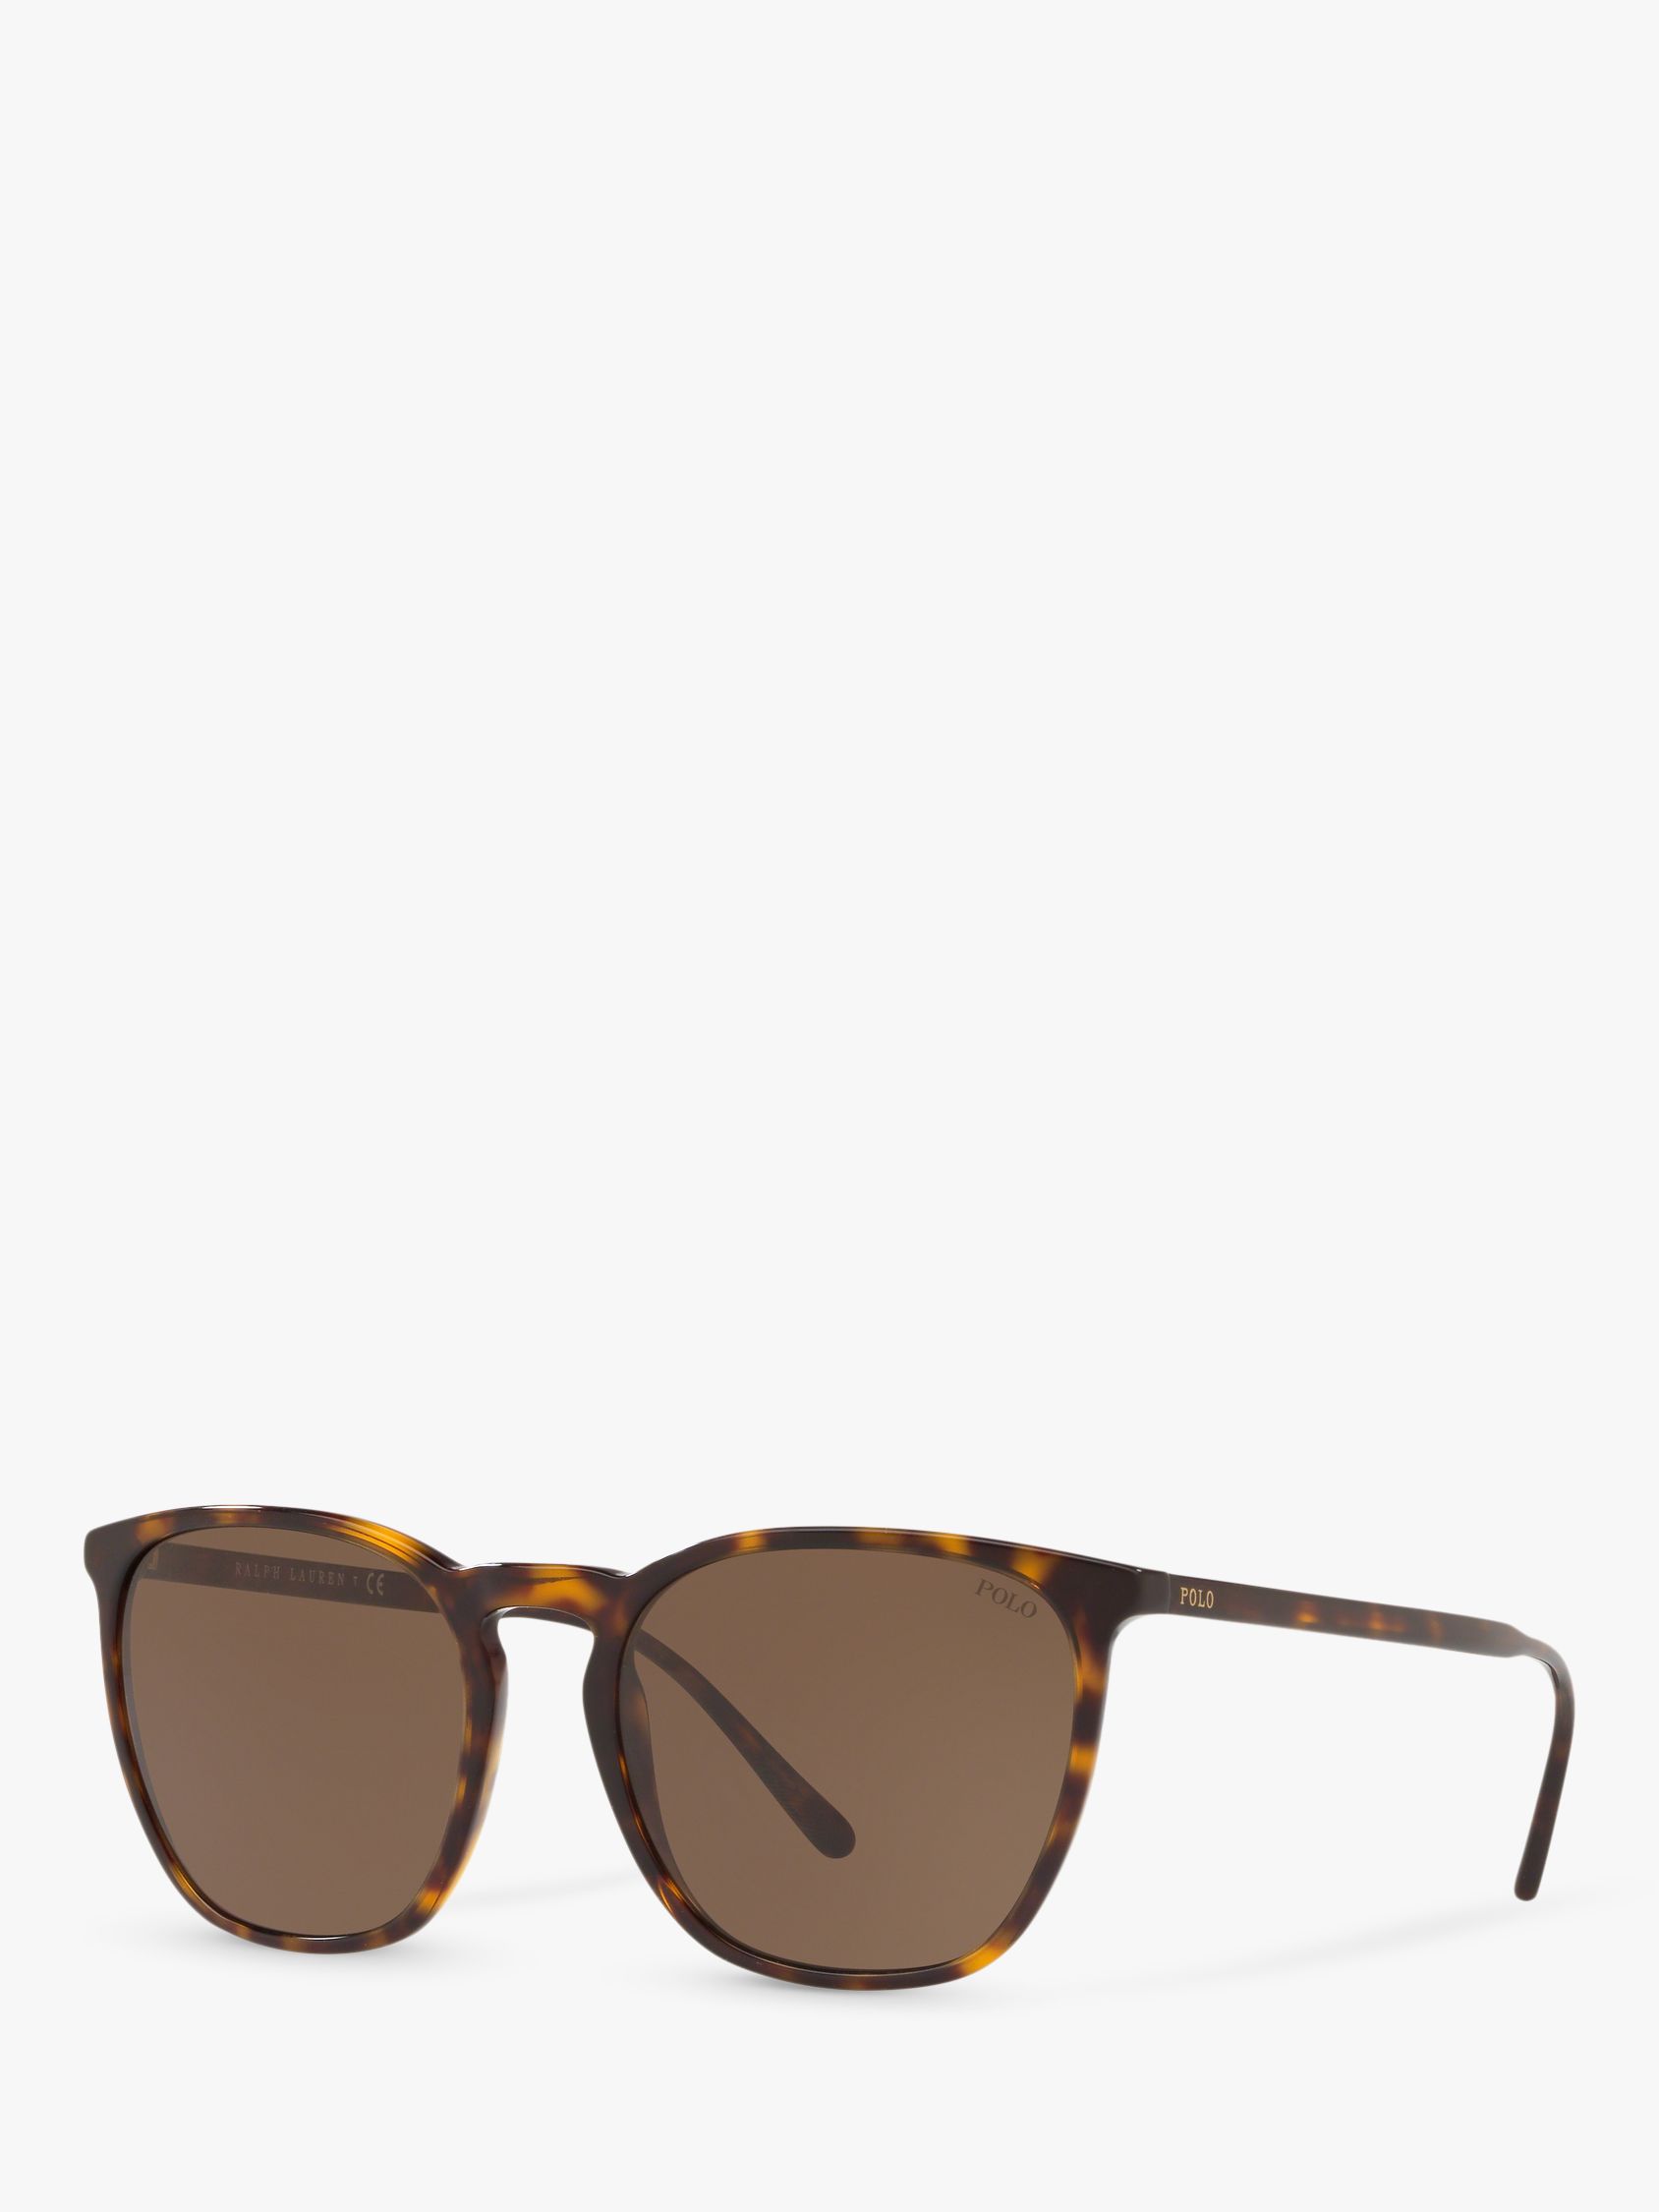 Polo Ralph Lauren PH4141 Men's Square Sunglasses, Dark Havana/Brown